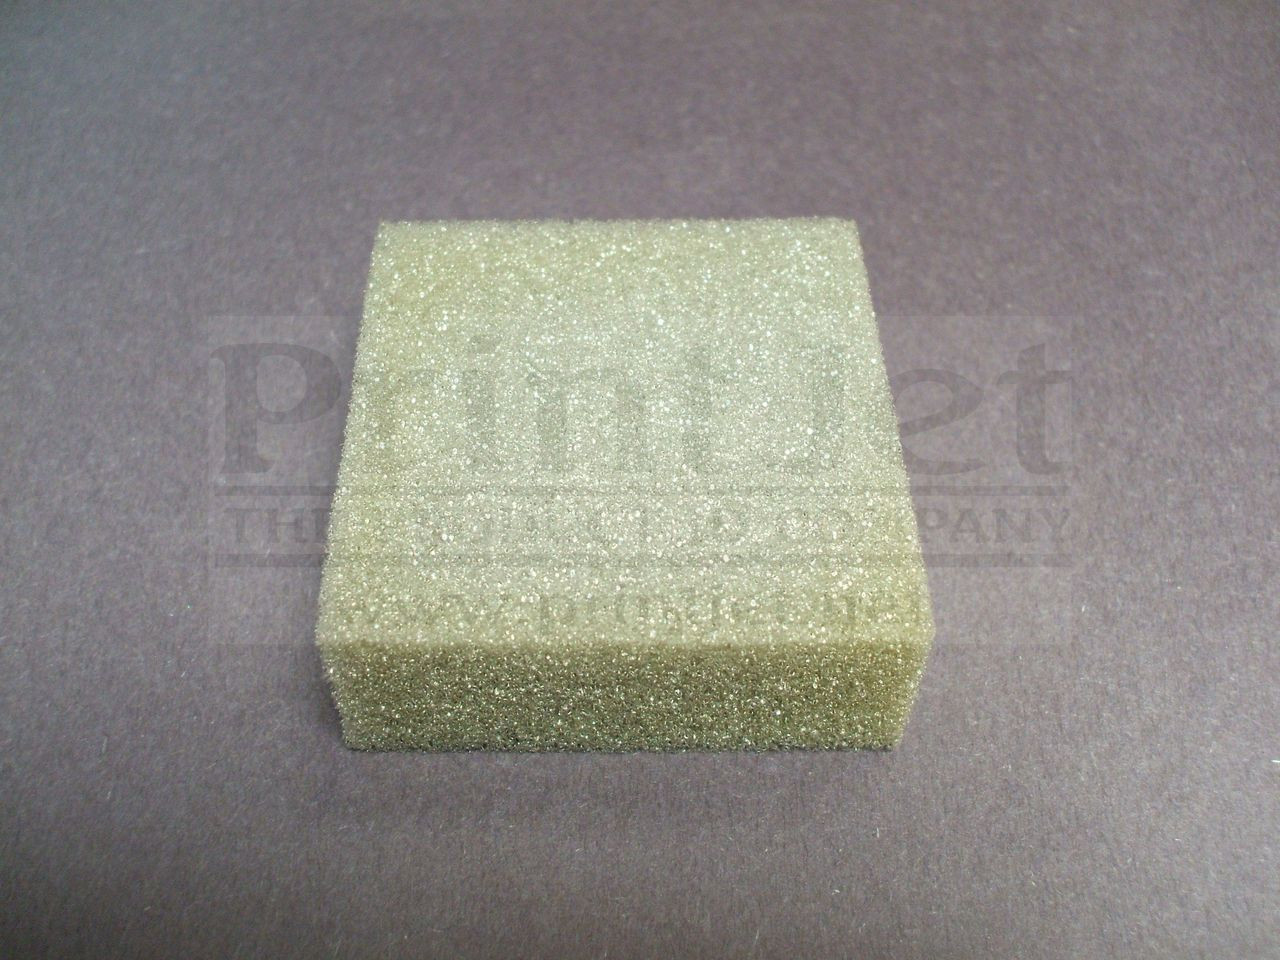 Trion 252405-001 OEM Replacement Cartridge Filter 18 Length Cellulose/Polyester Blend Filter Media 9.21 OD 